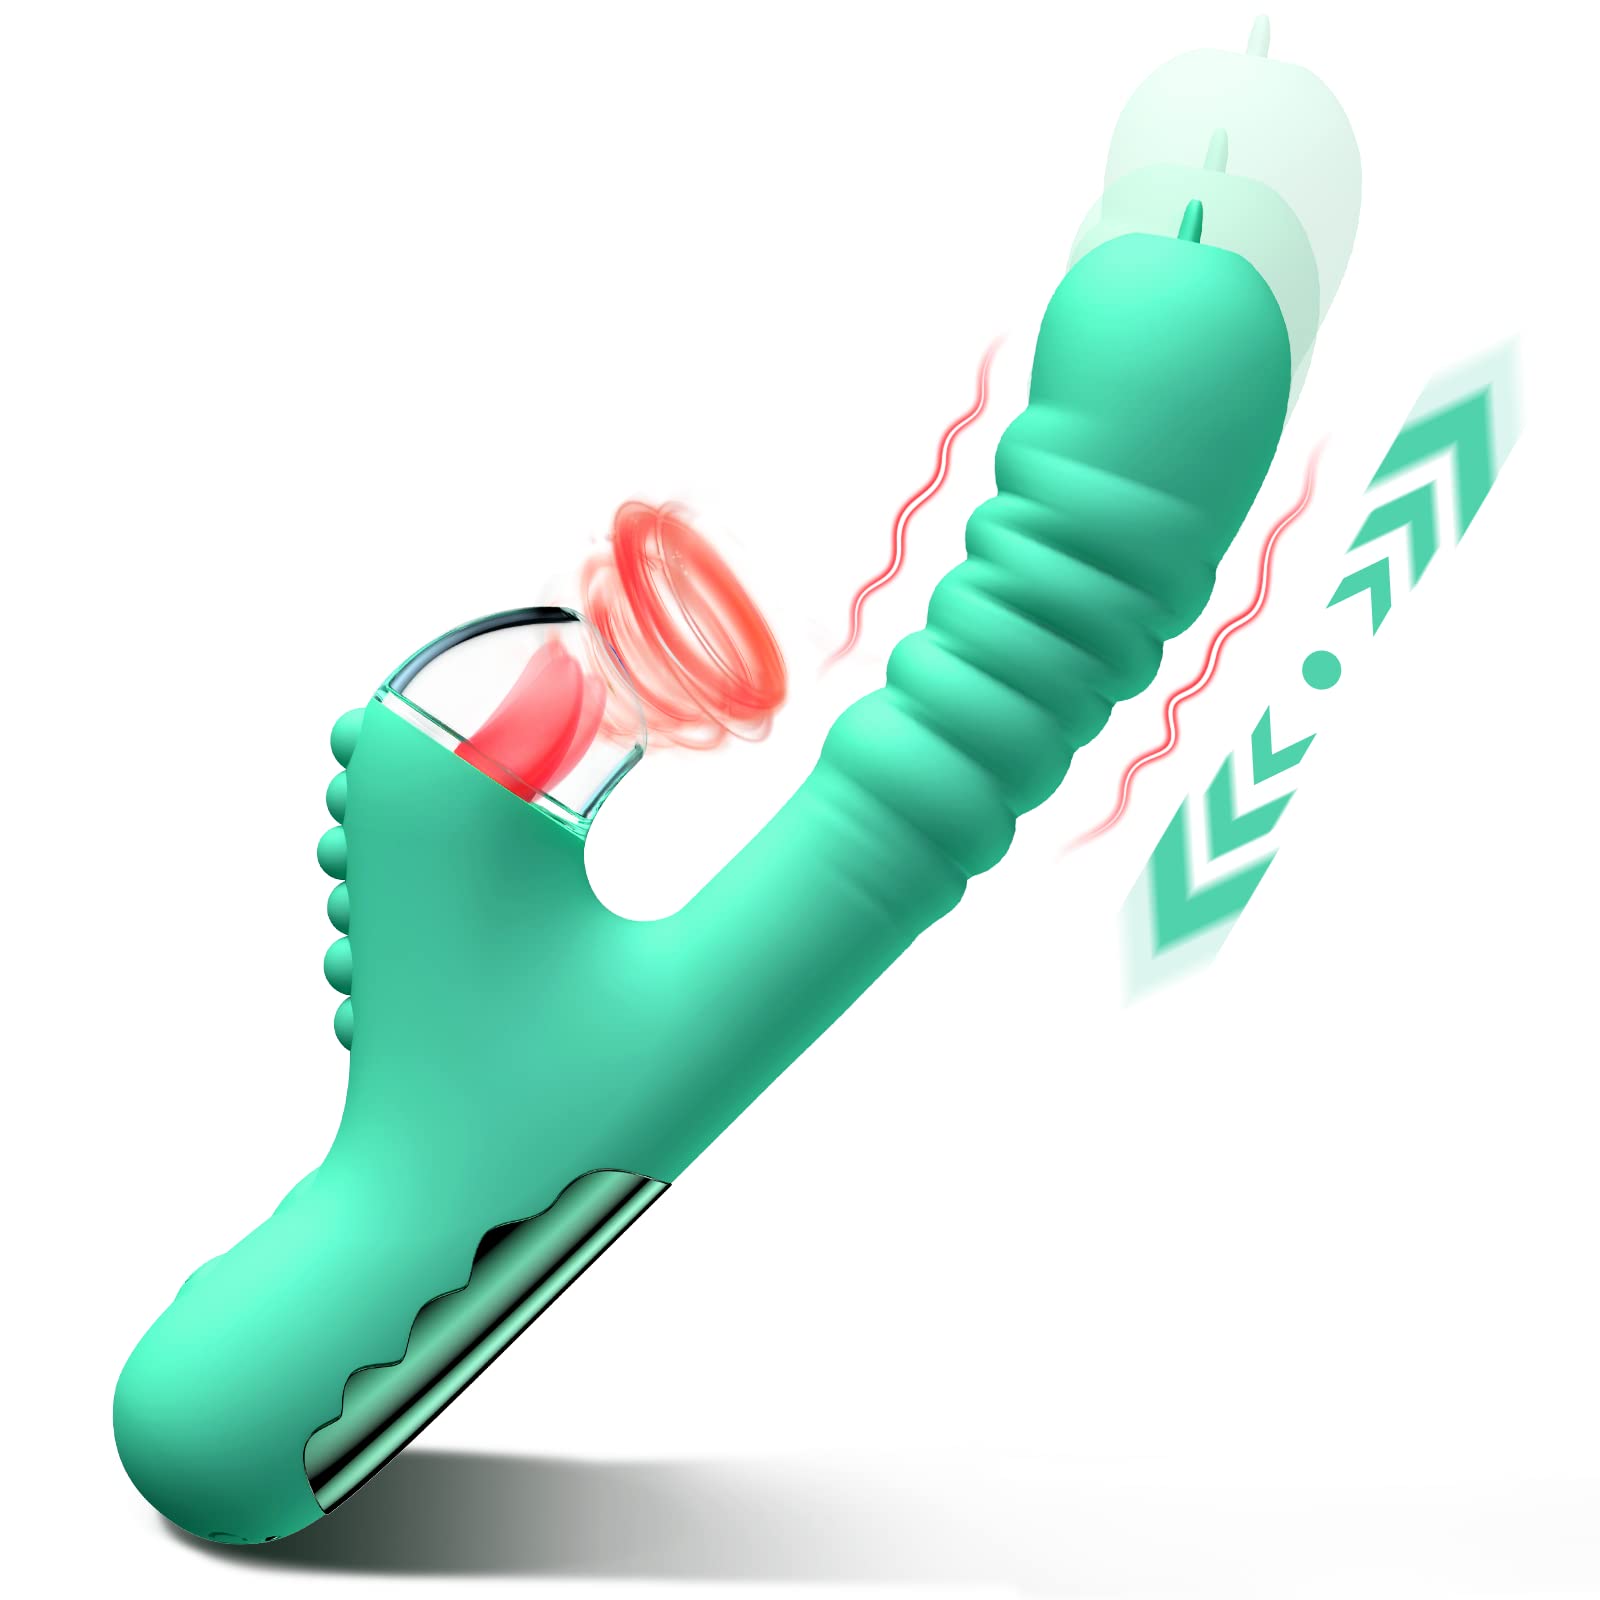 Lurevibe - Small Dinosaur Vibrator - Multi-frequency Telescopic Tongue Sucking Clit Stimulation Vibrator - Lurevibe